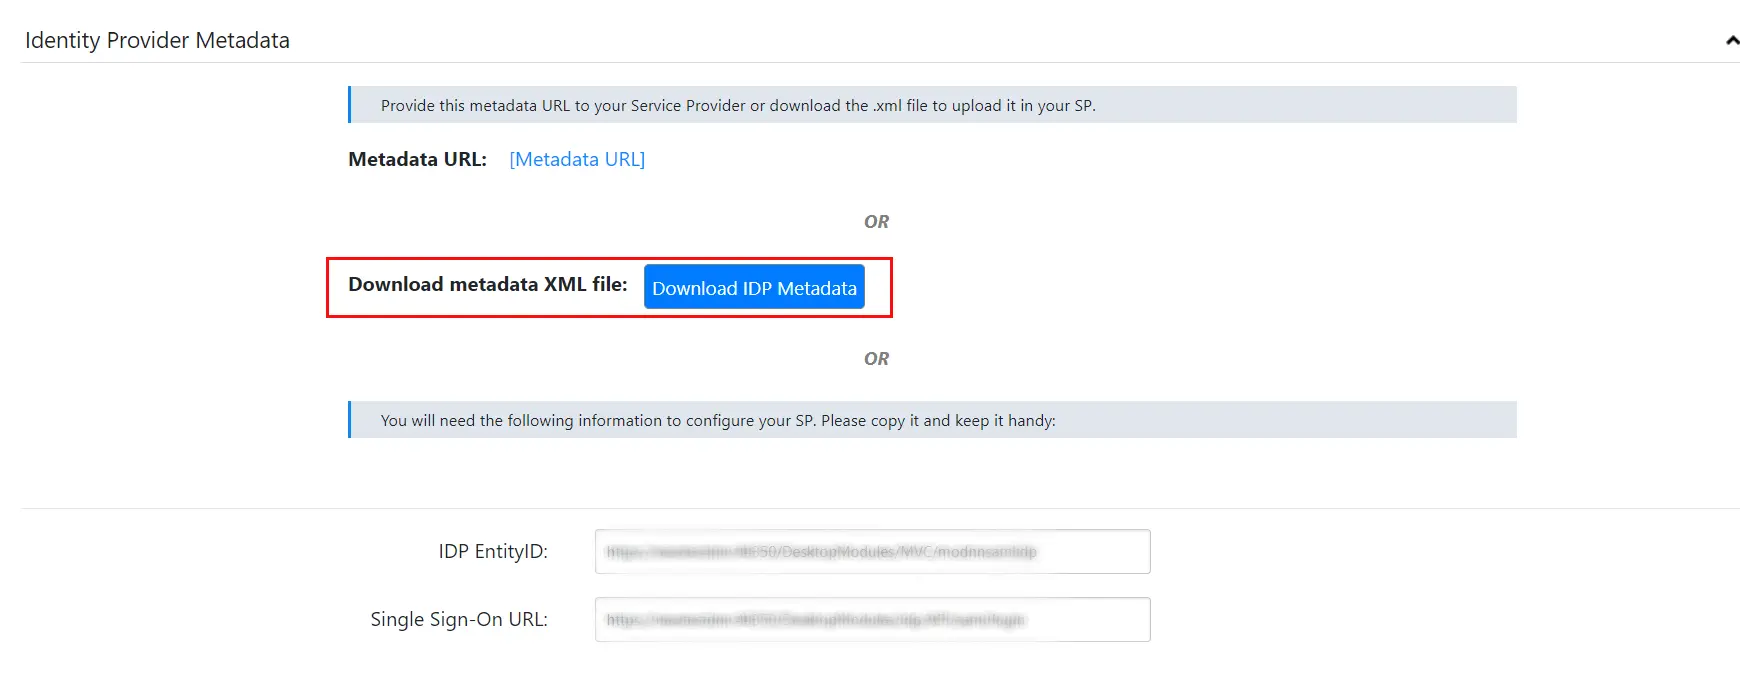 DNN SAML IDP - DNN as SAML Identity Provider - Metadata XML file